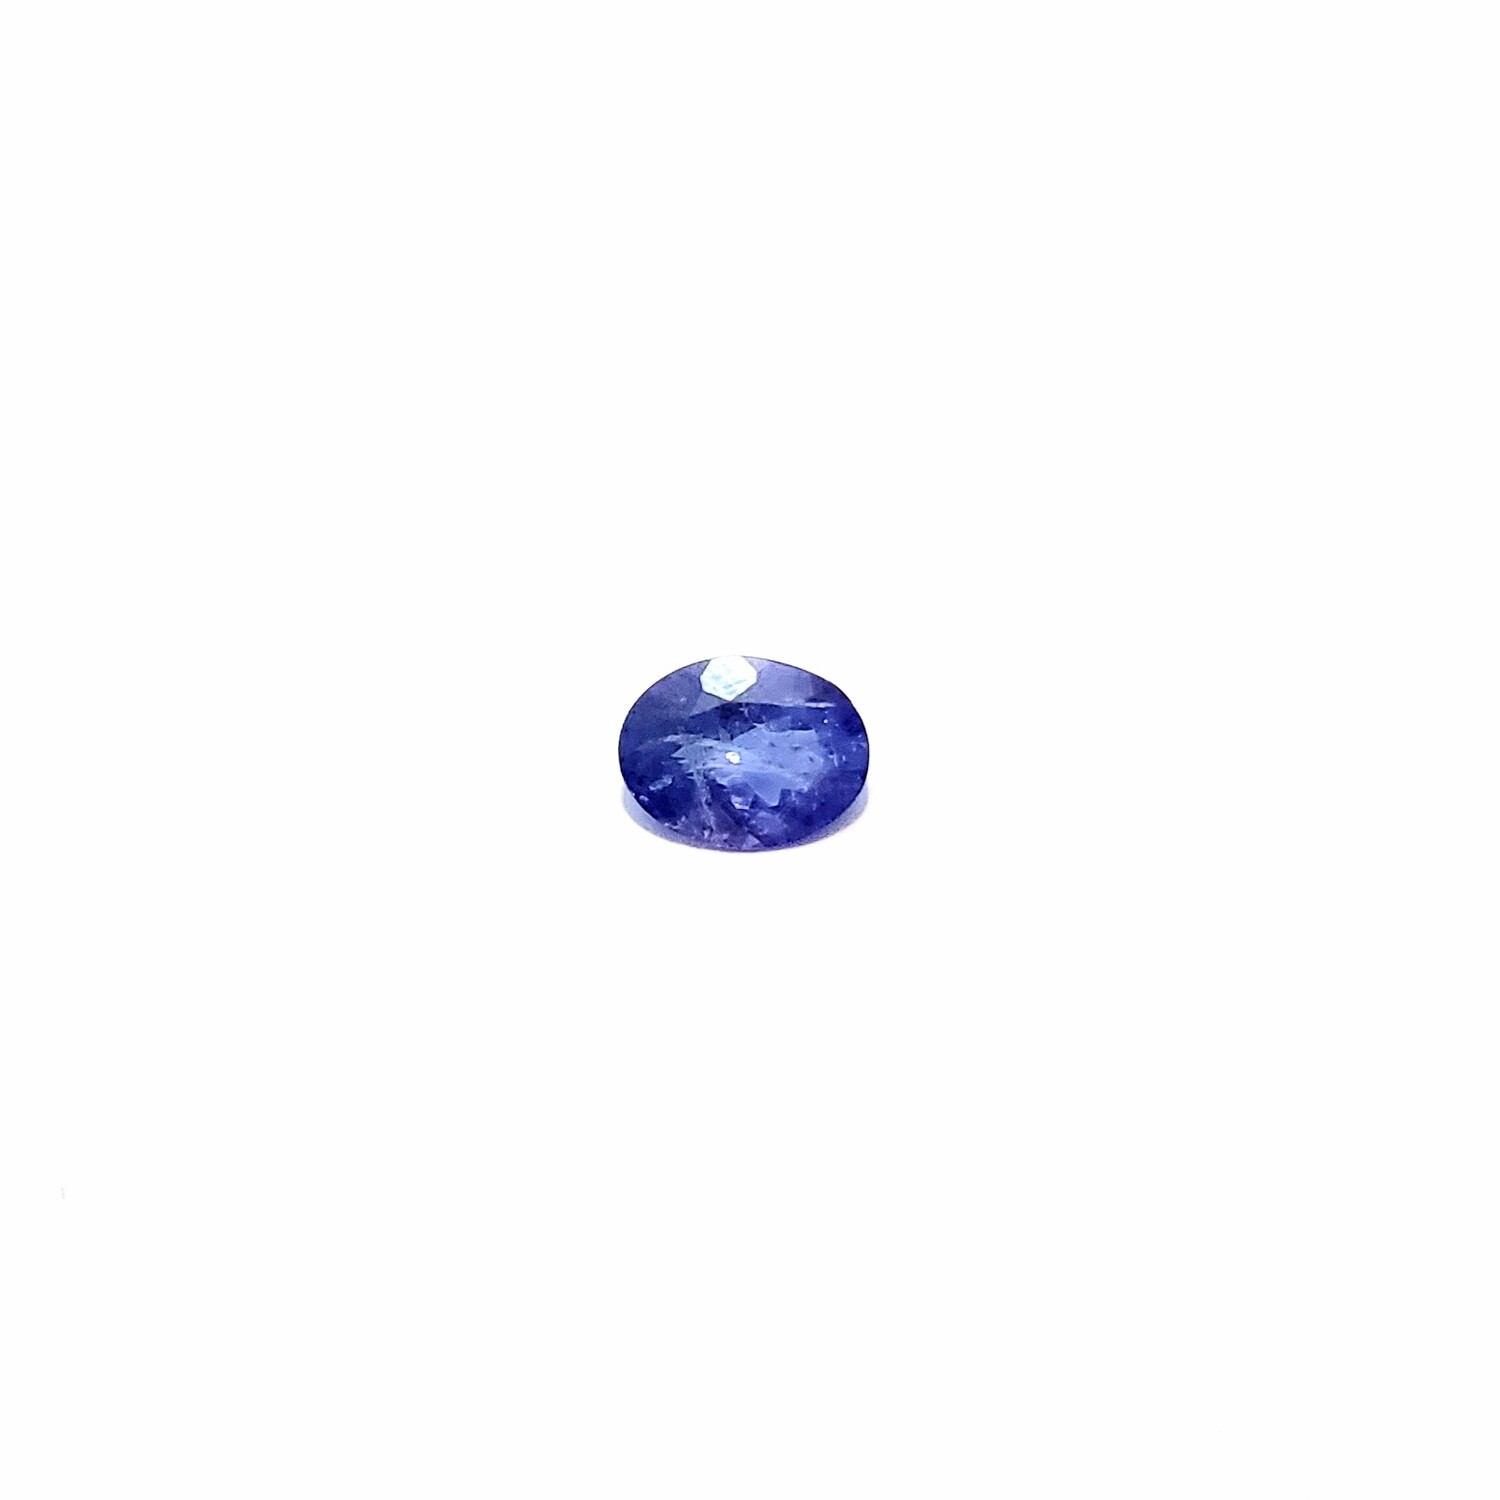 Genuine Tanzanite Blue Oval 1.32 Carat